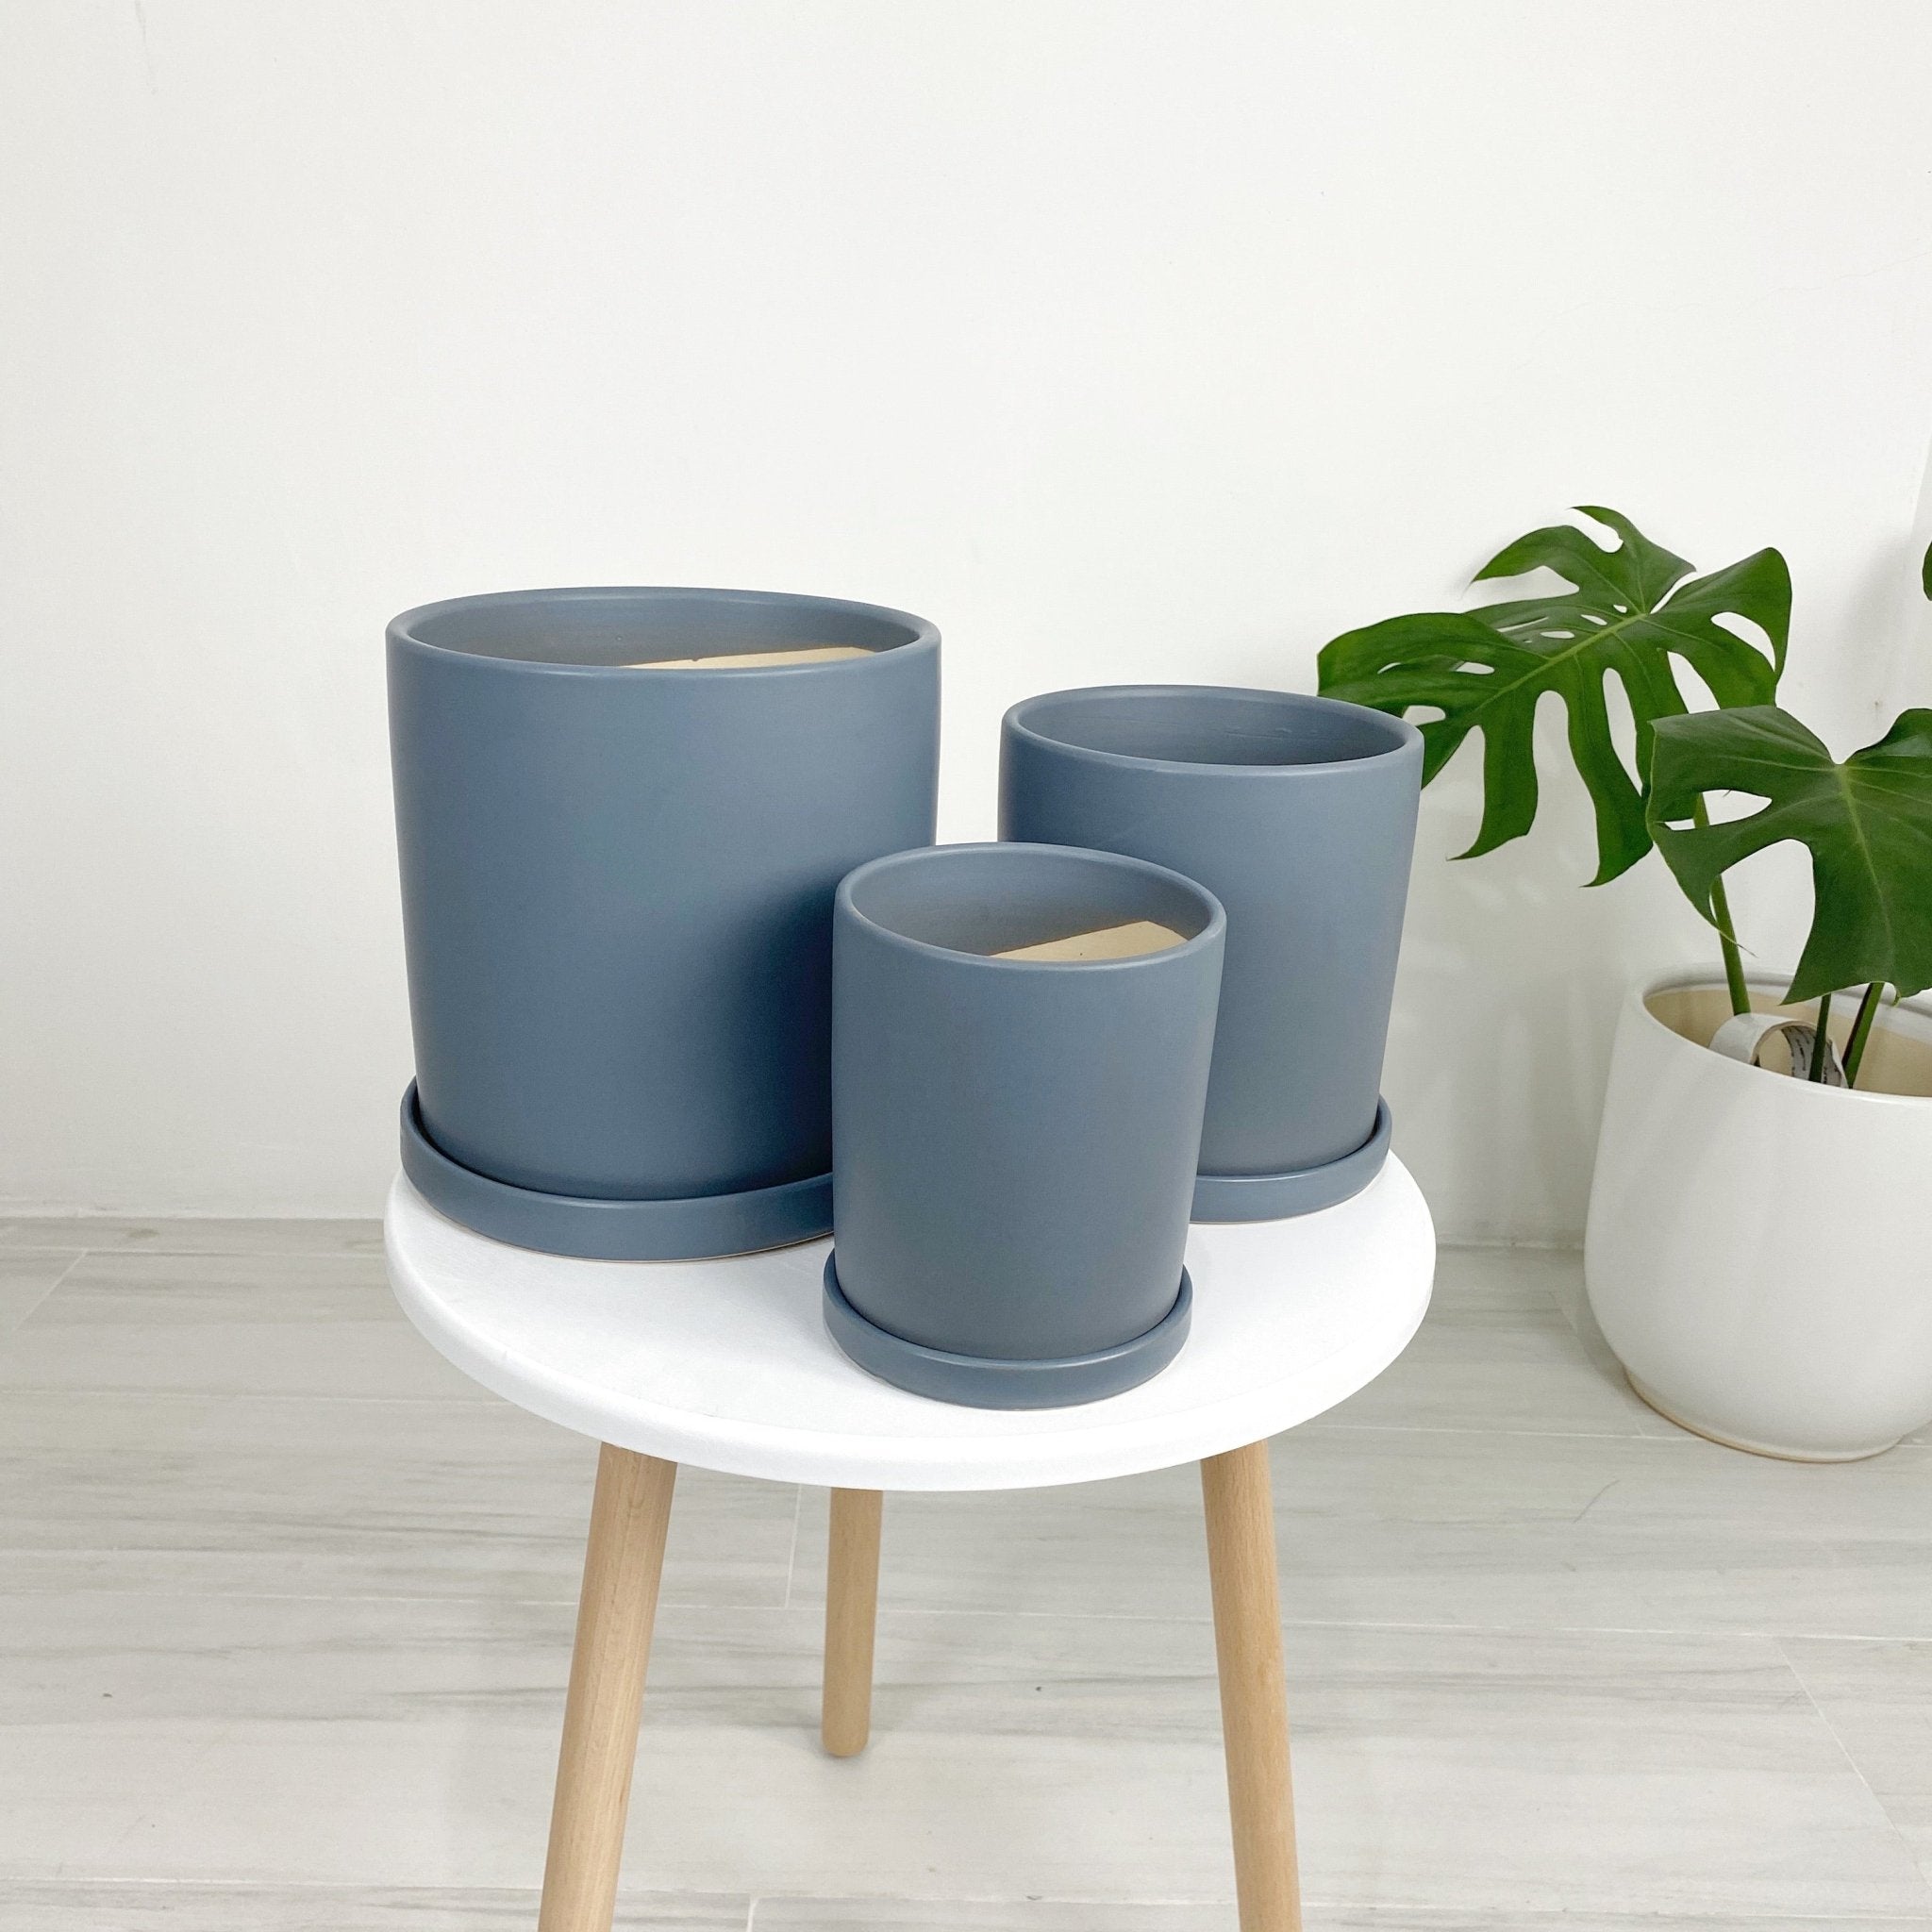 Cylinder Glazed Clay Ceramic Pot with Ceramic Saucer - Pots For Plants